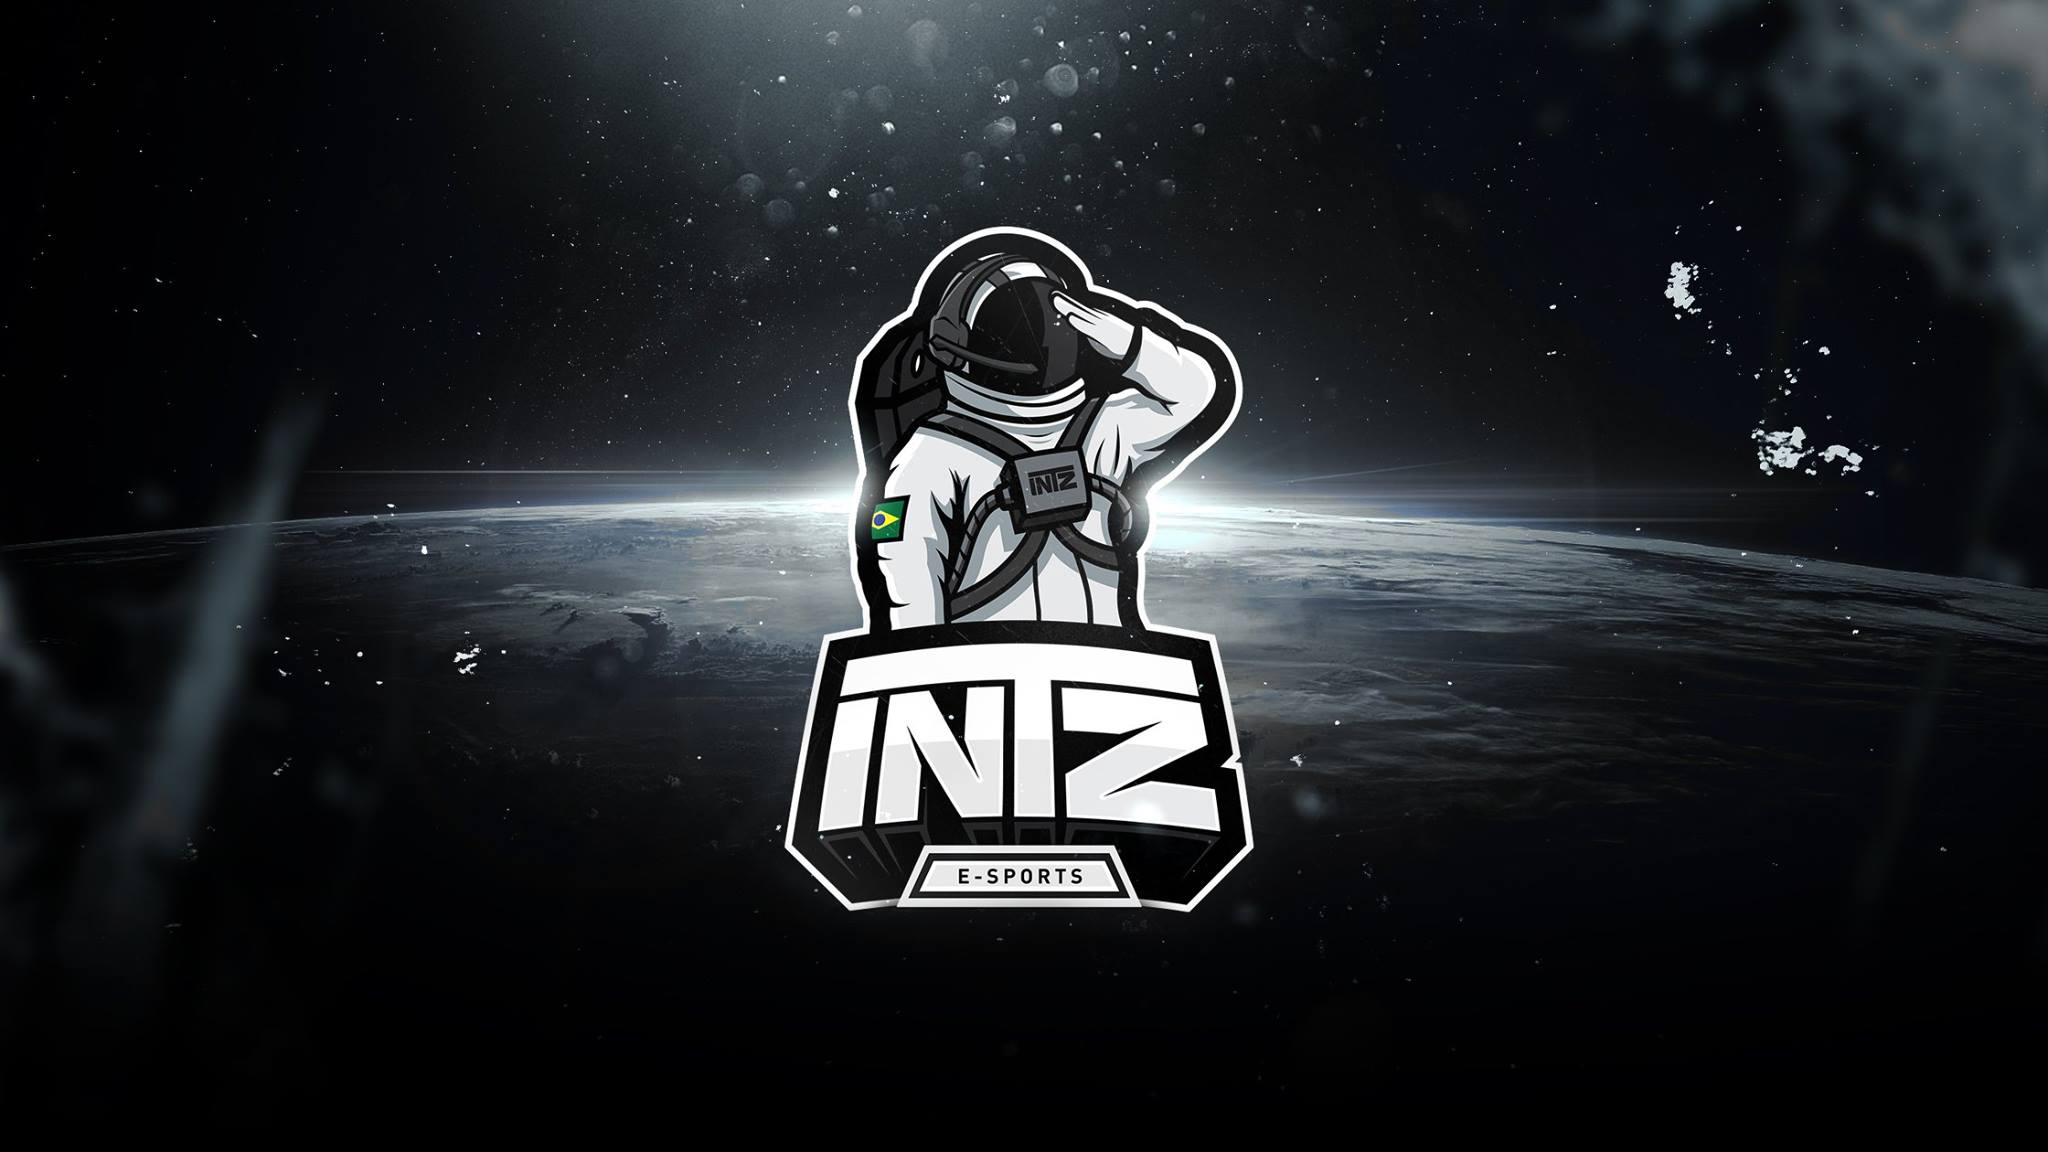 INTZ abre o Mundial de League of Legends contra MAD Lions - Vigília Nerd